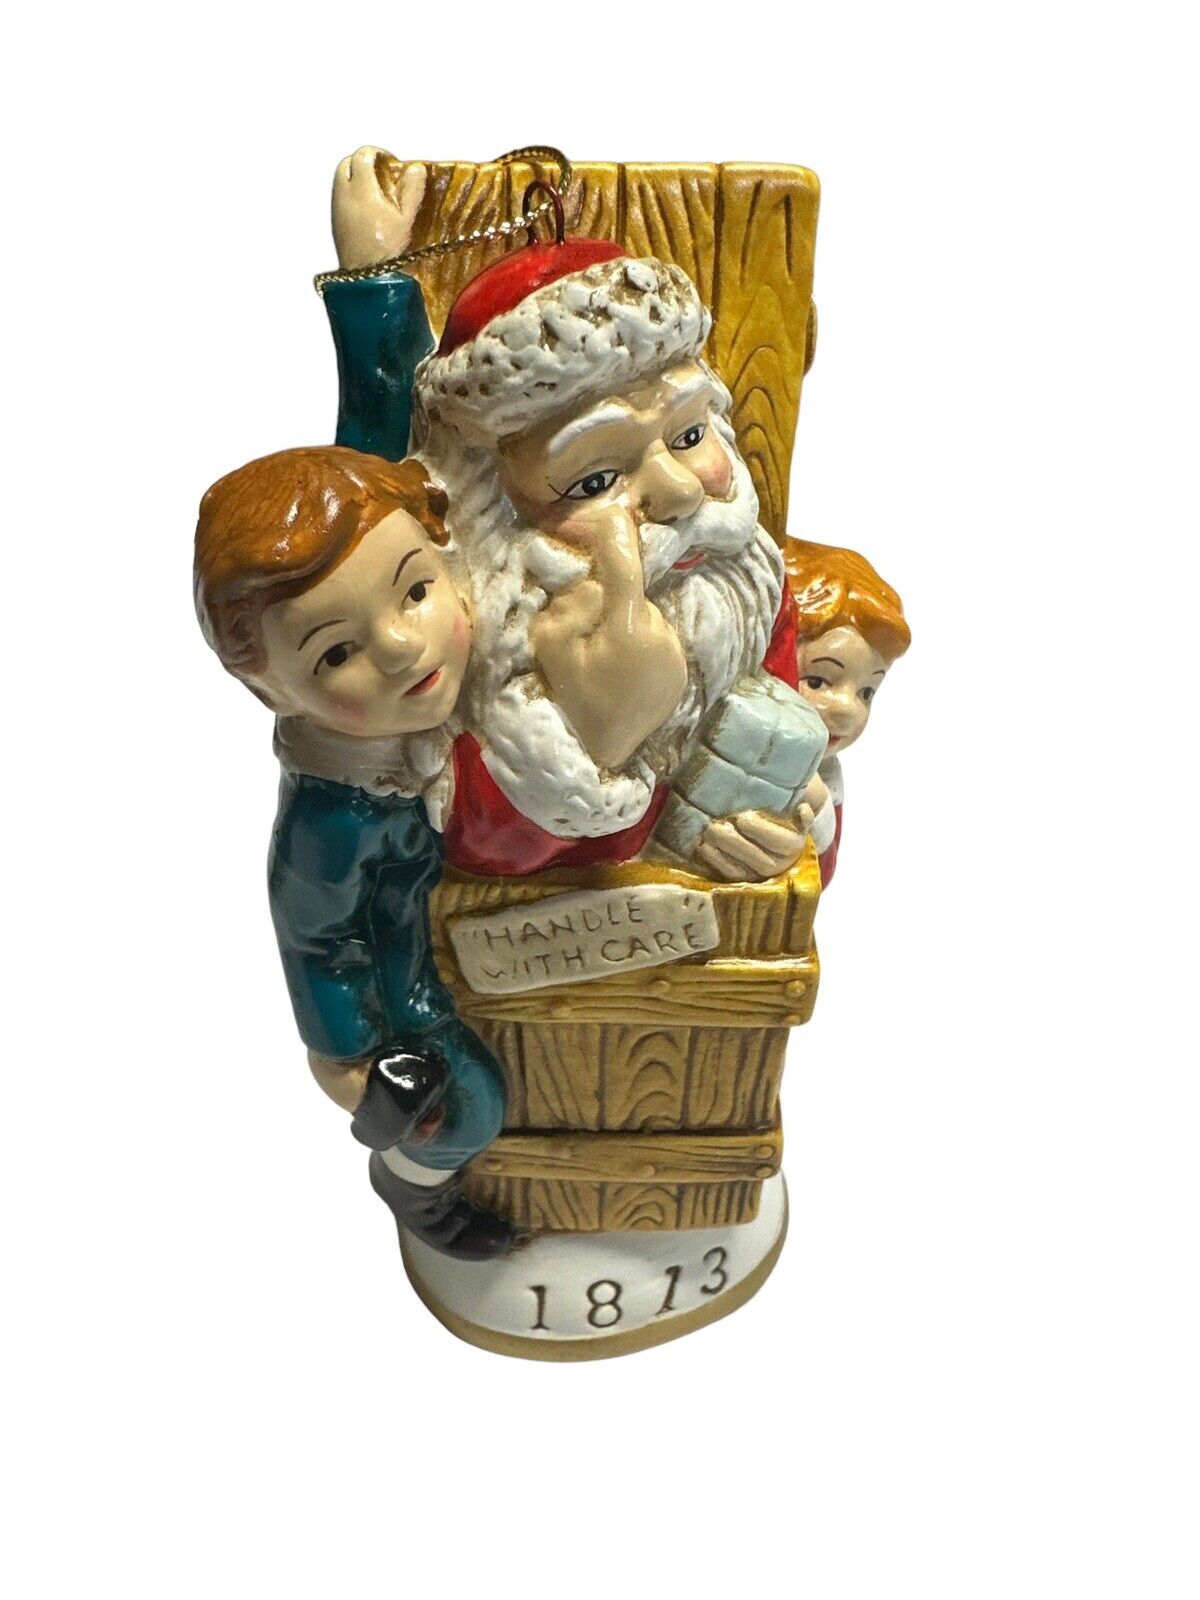 Memories Of Santa “Handle With Care” America Circa 1873 Ornament